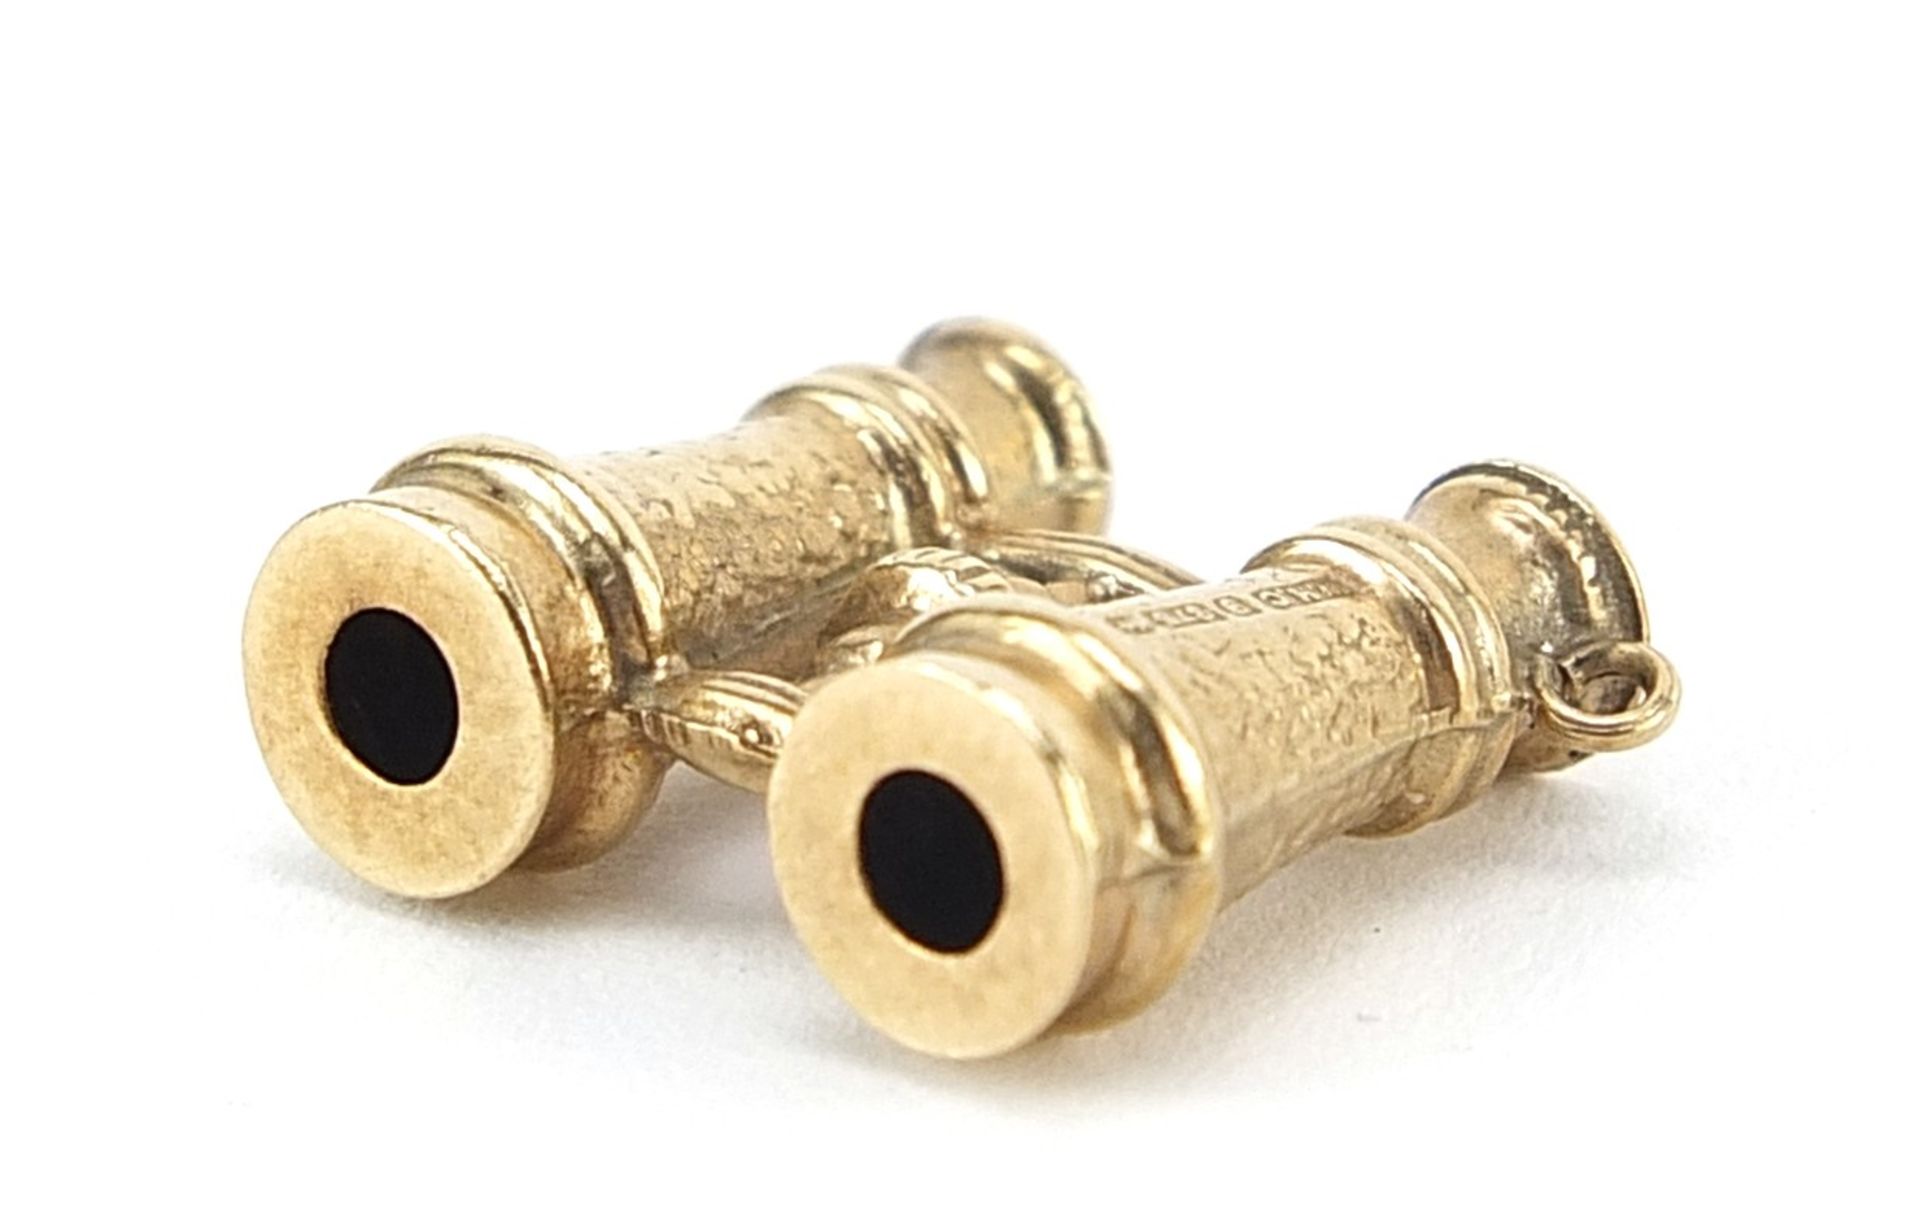 9ct gold pair of binoculars charm, 1.4cm wide, 1.1g